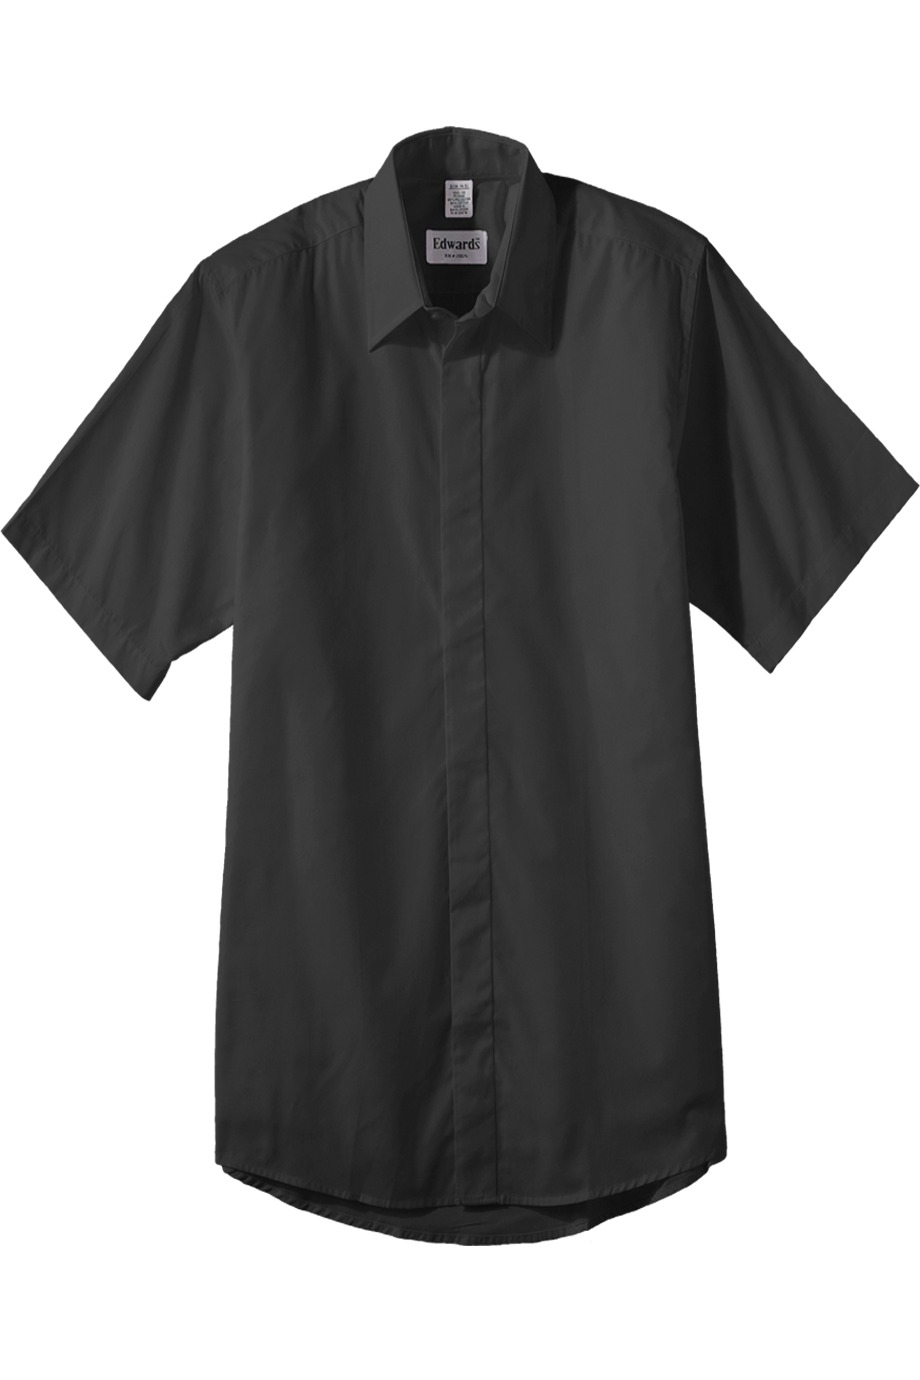 Edwards Garment 1240 - Men's Short Sleeve Cafe Shirt